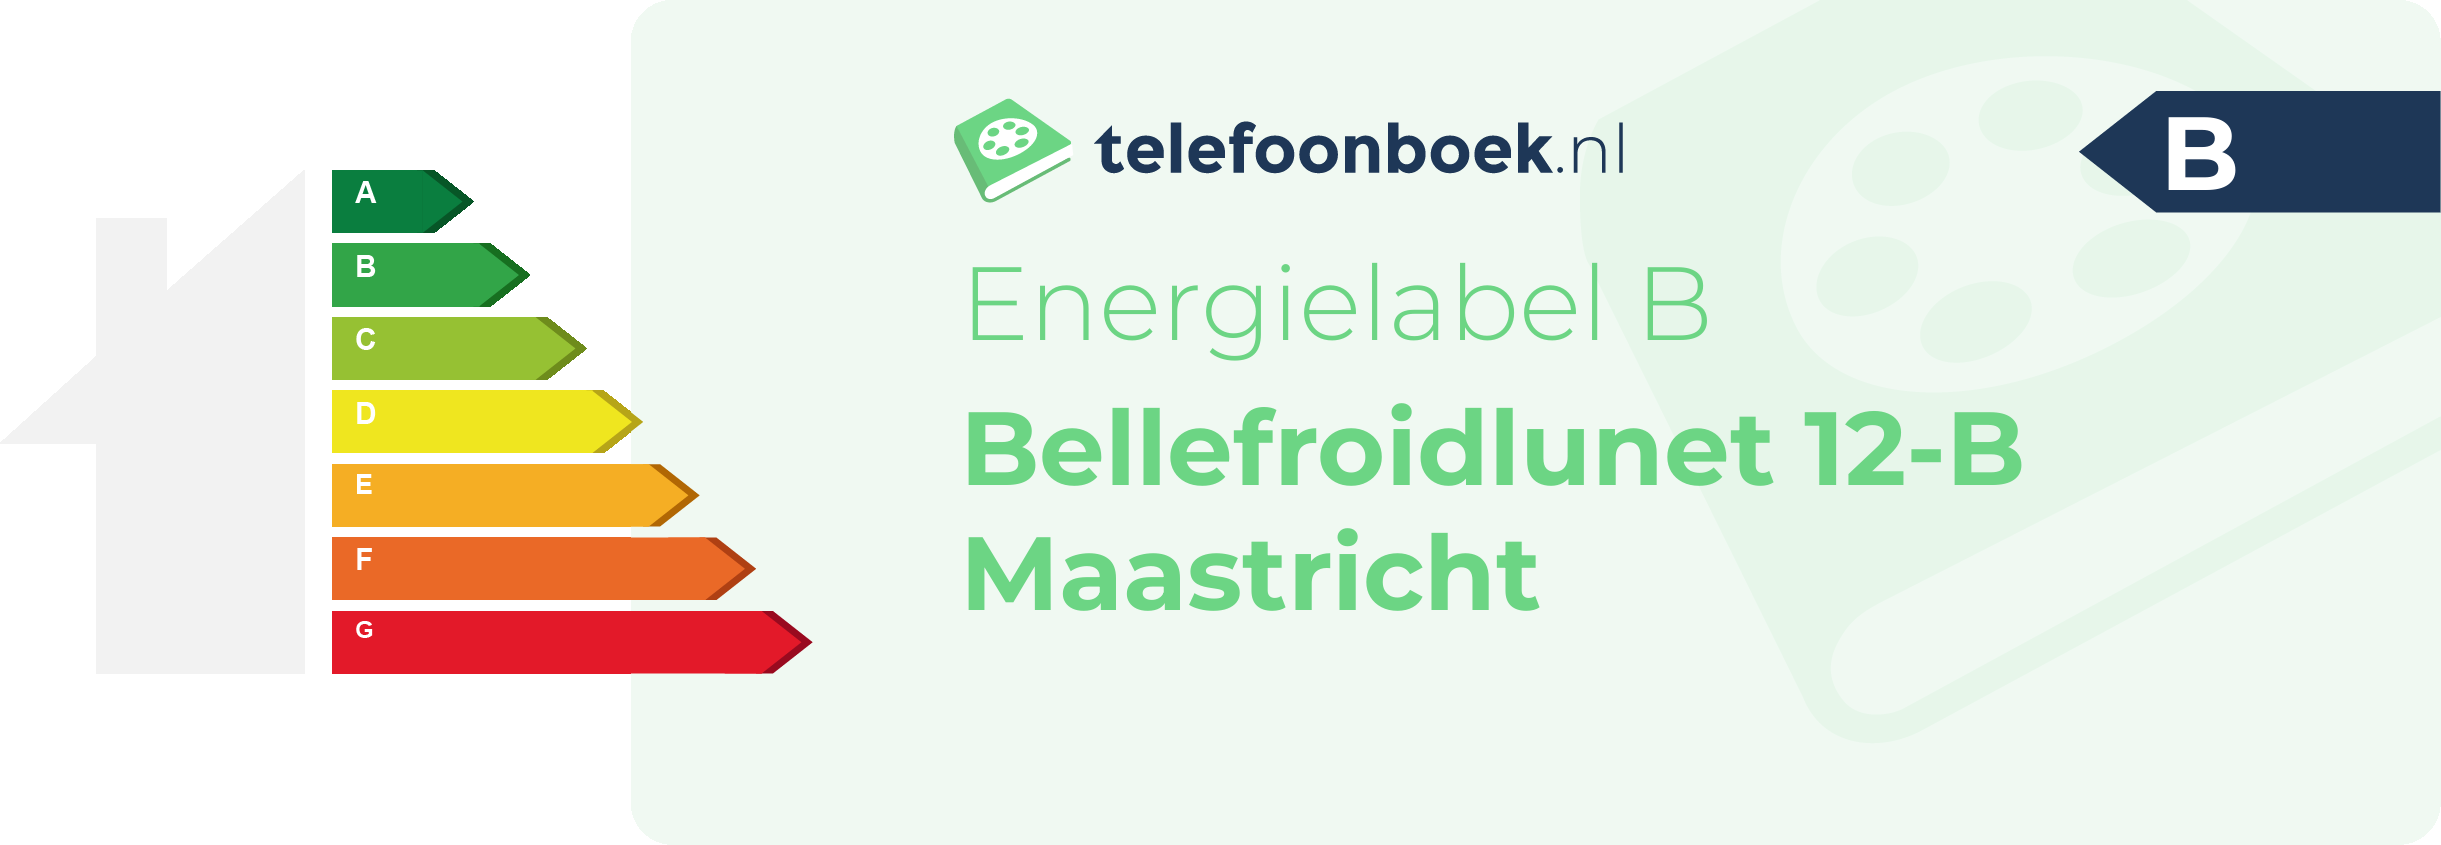 Energielabel Bellefroidlunet 12-B Maastricht